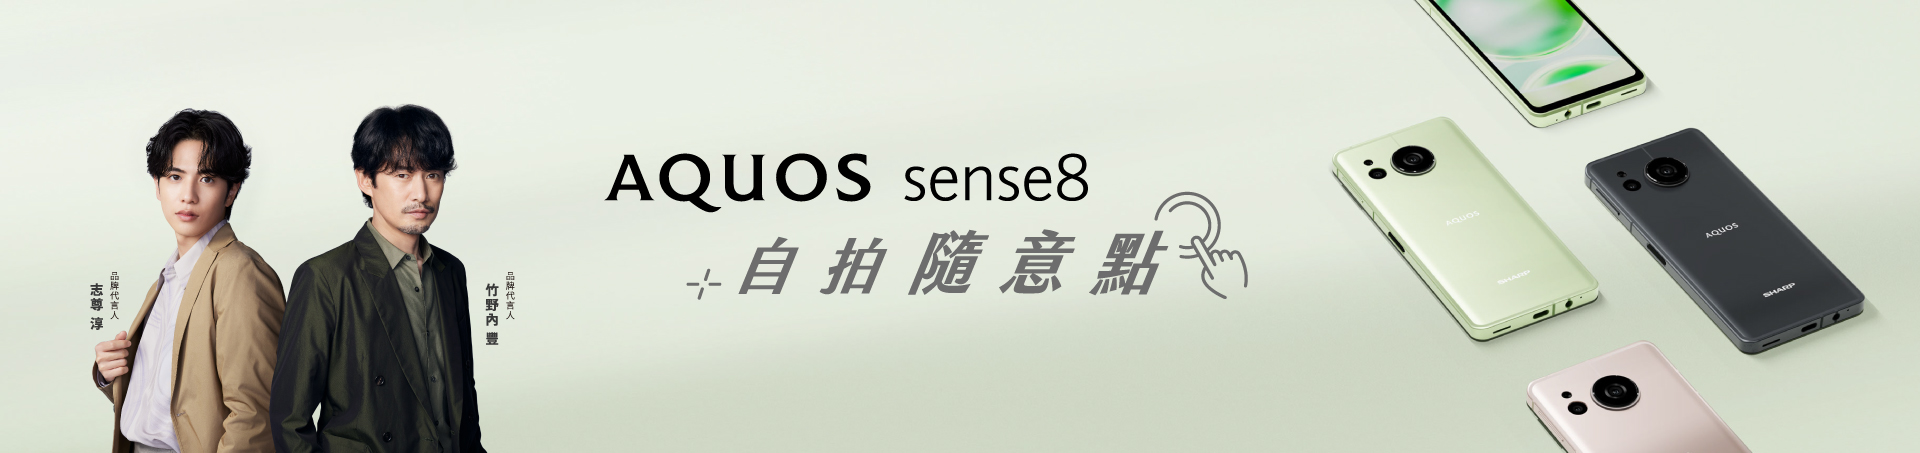 AQUOS sense8 自拍隨意點